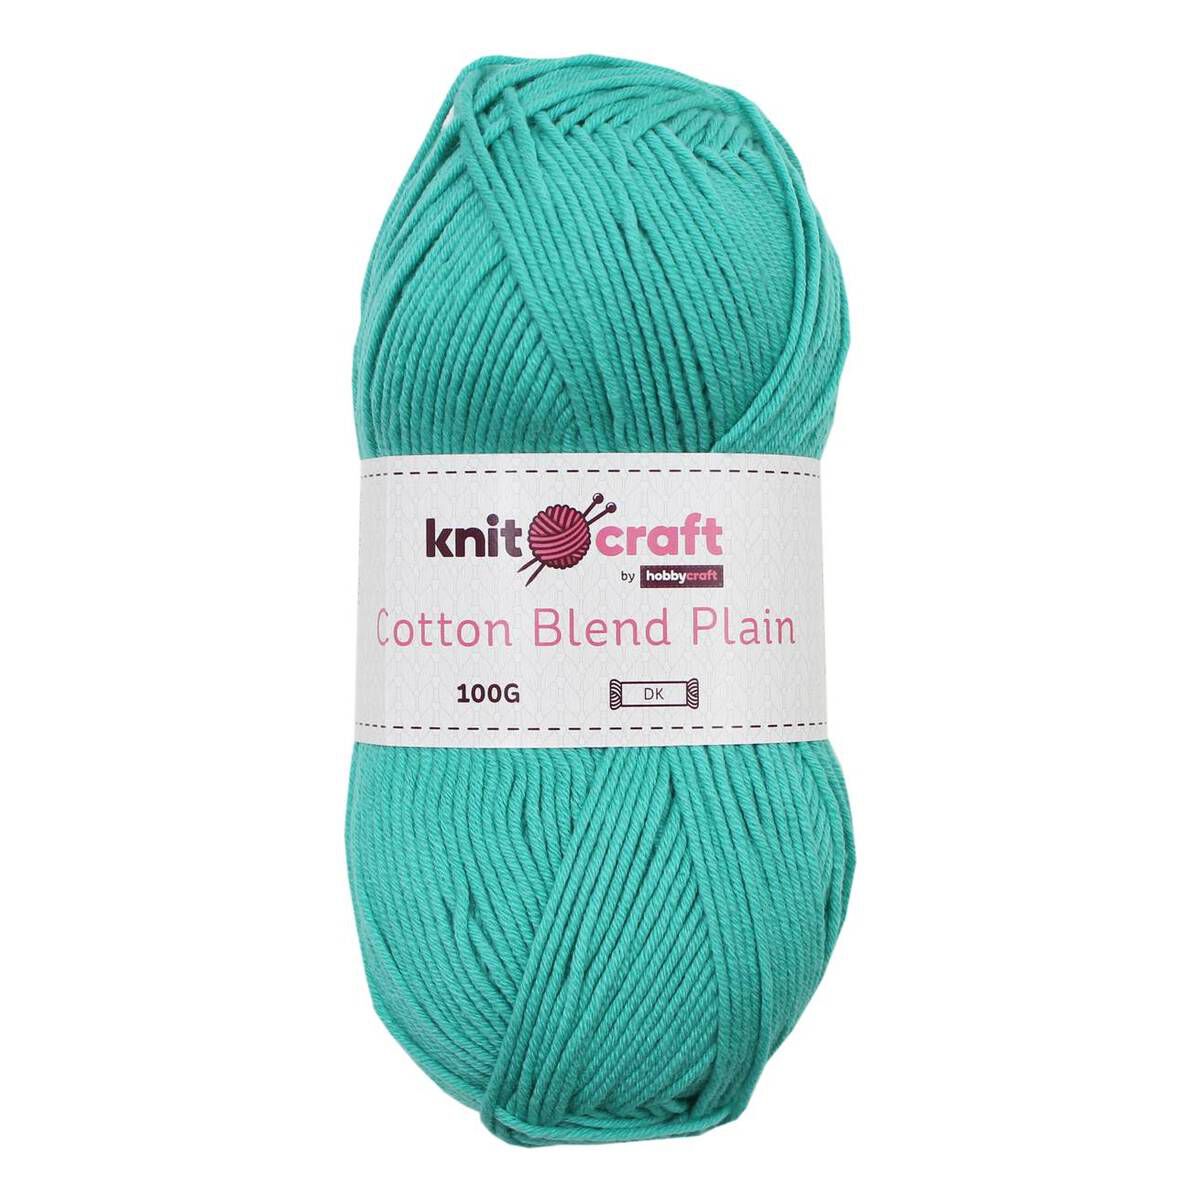 Knitcraft Teal Cotton Blend Plain DK Yarn 100g | Hobbycraft